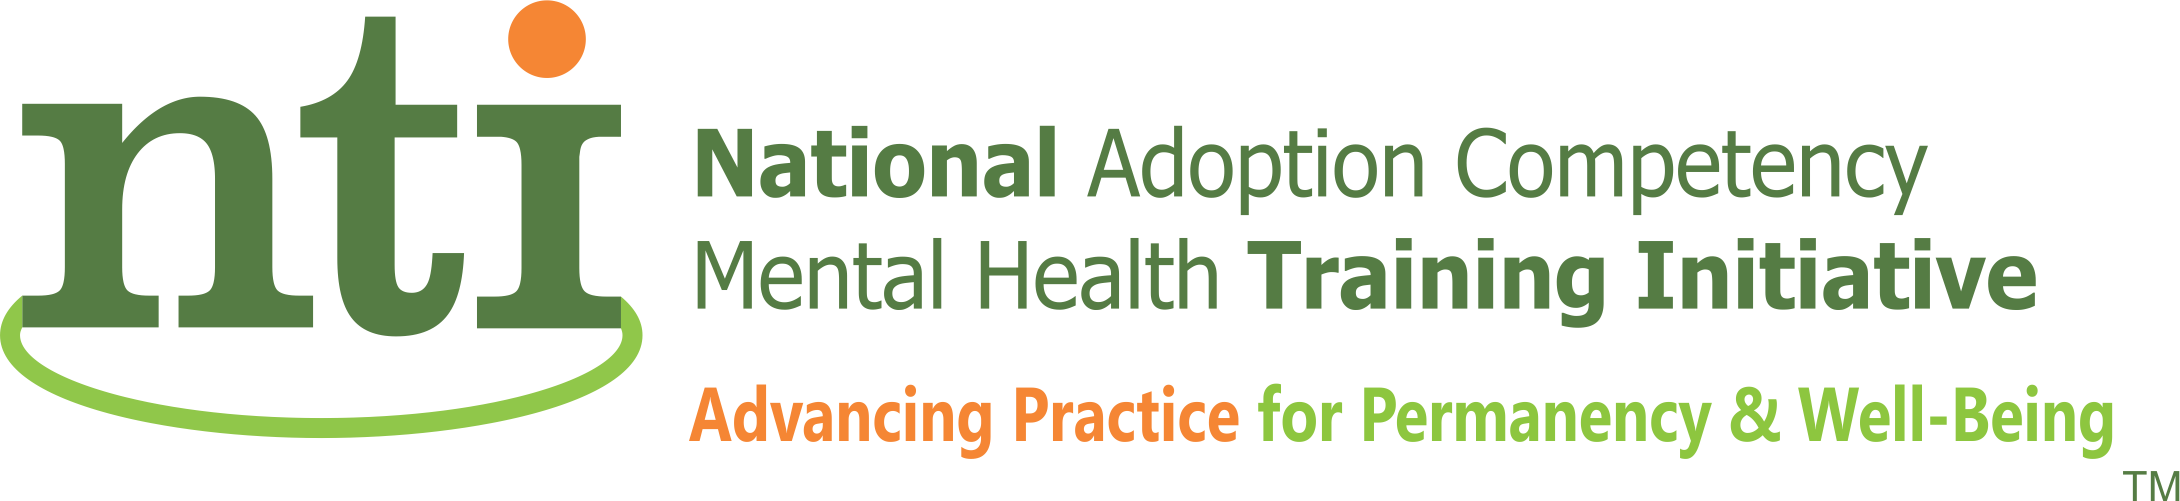 National Adoption Competency Mental Health Training Initiative logo